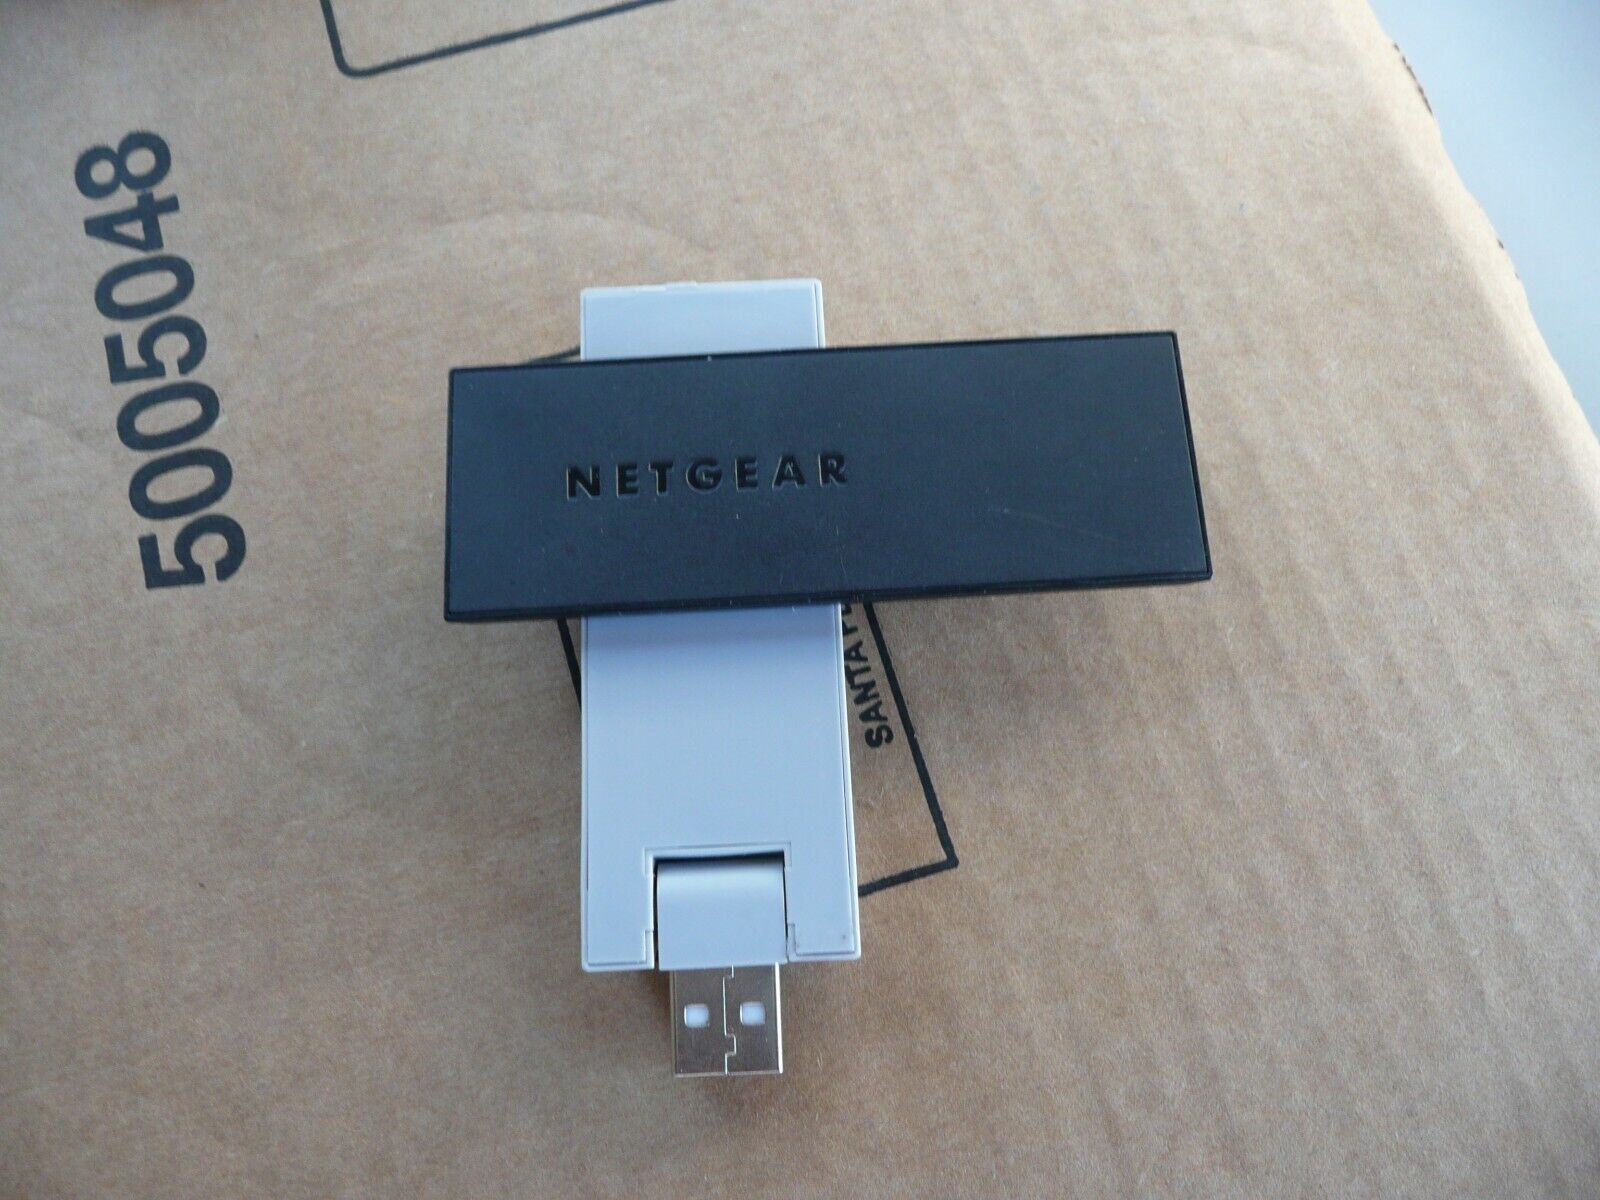 NetGear A6200 WiFi USB Adapter AC1200 Dual Band - 